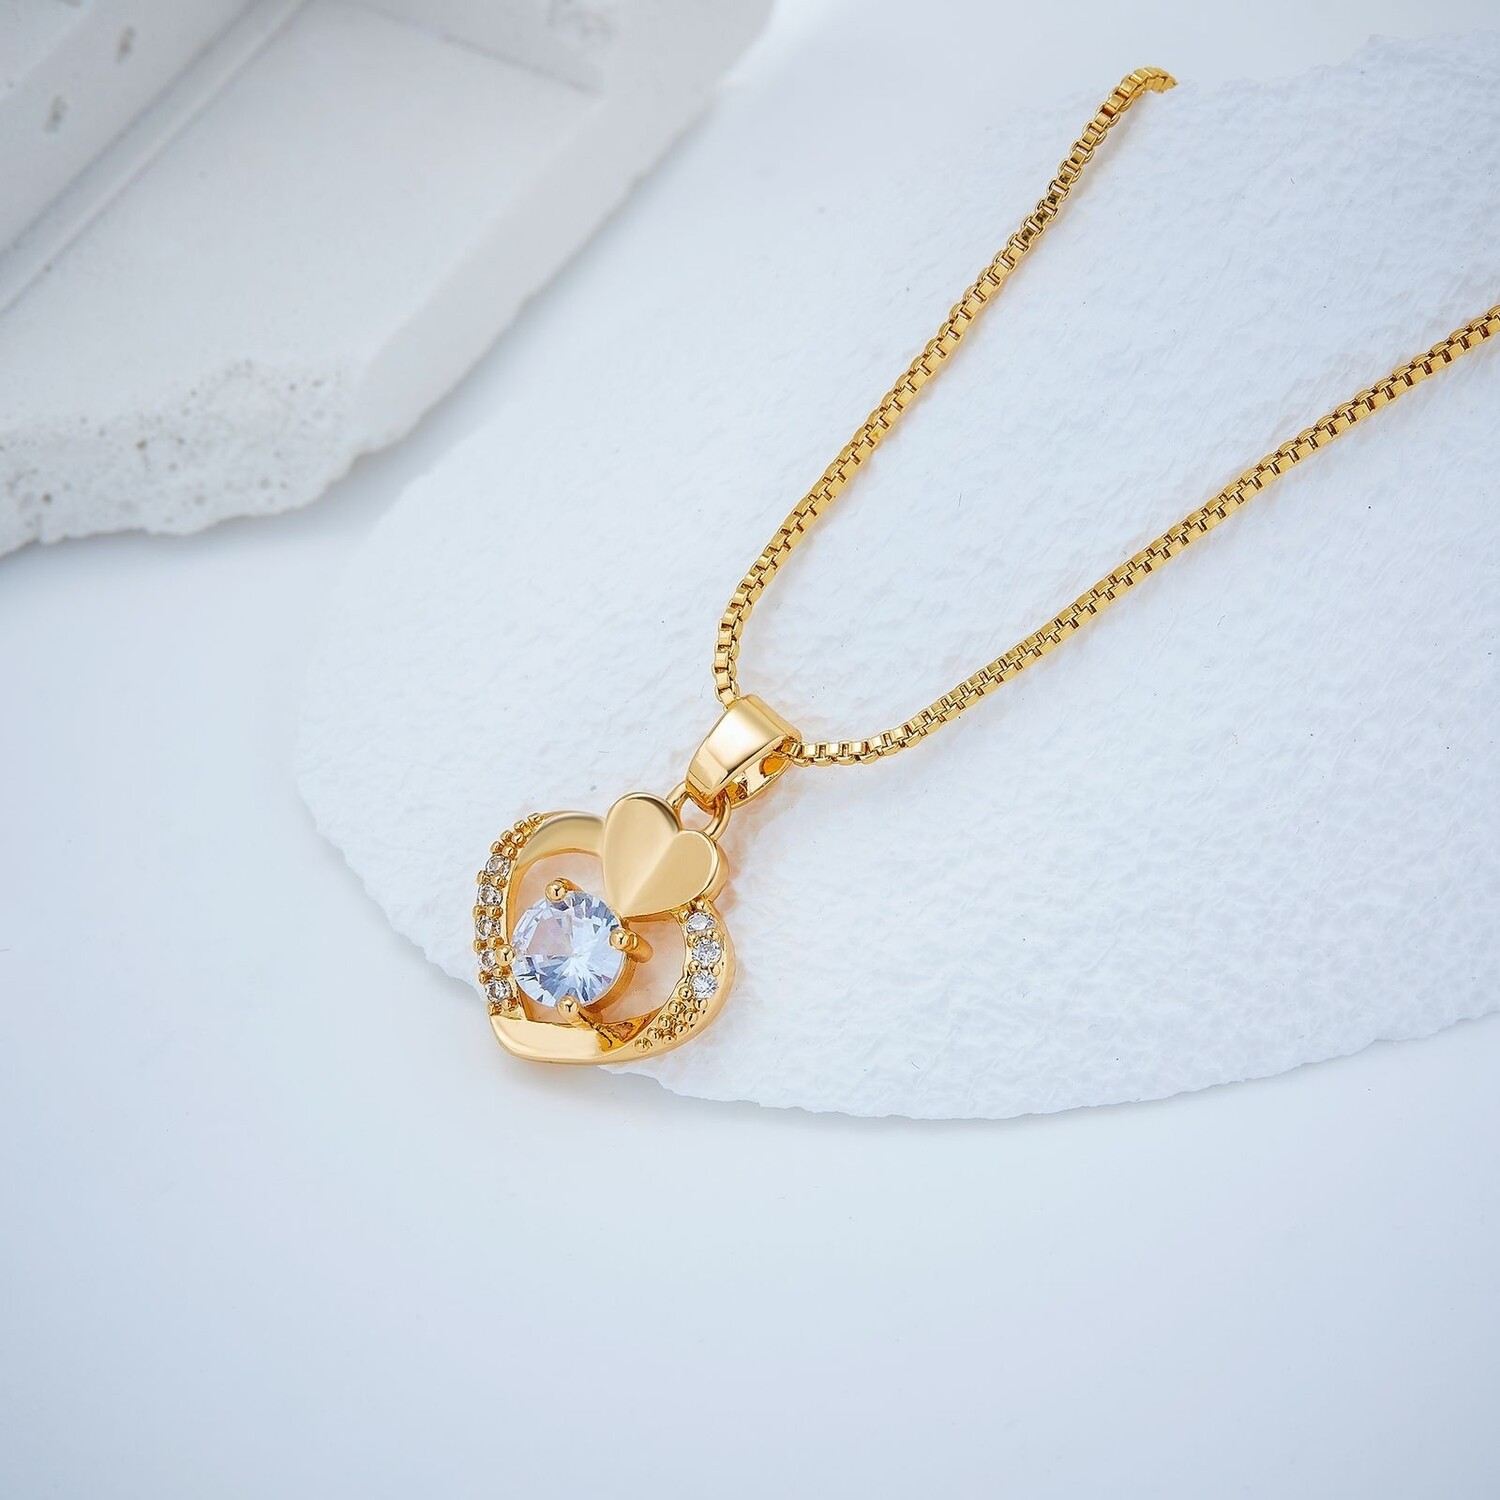 Women rose gold heart shaped pendant fashion jewellery necklace 